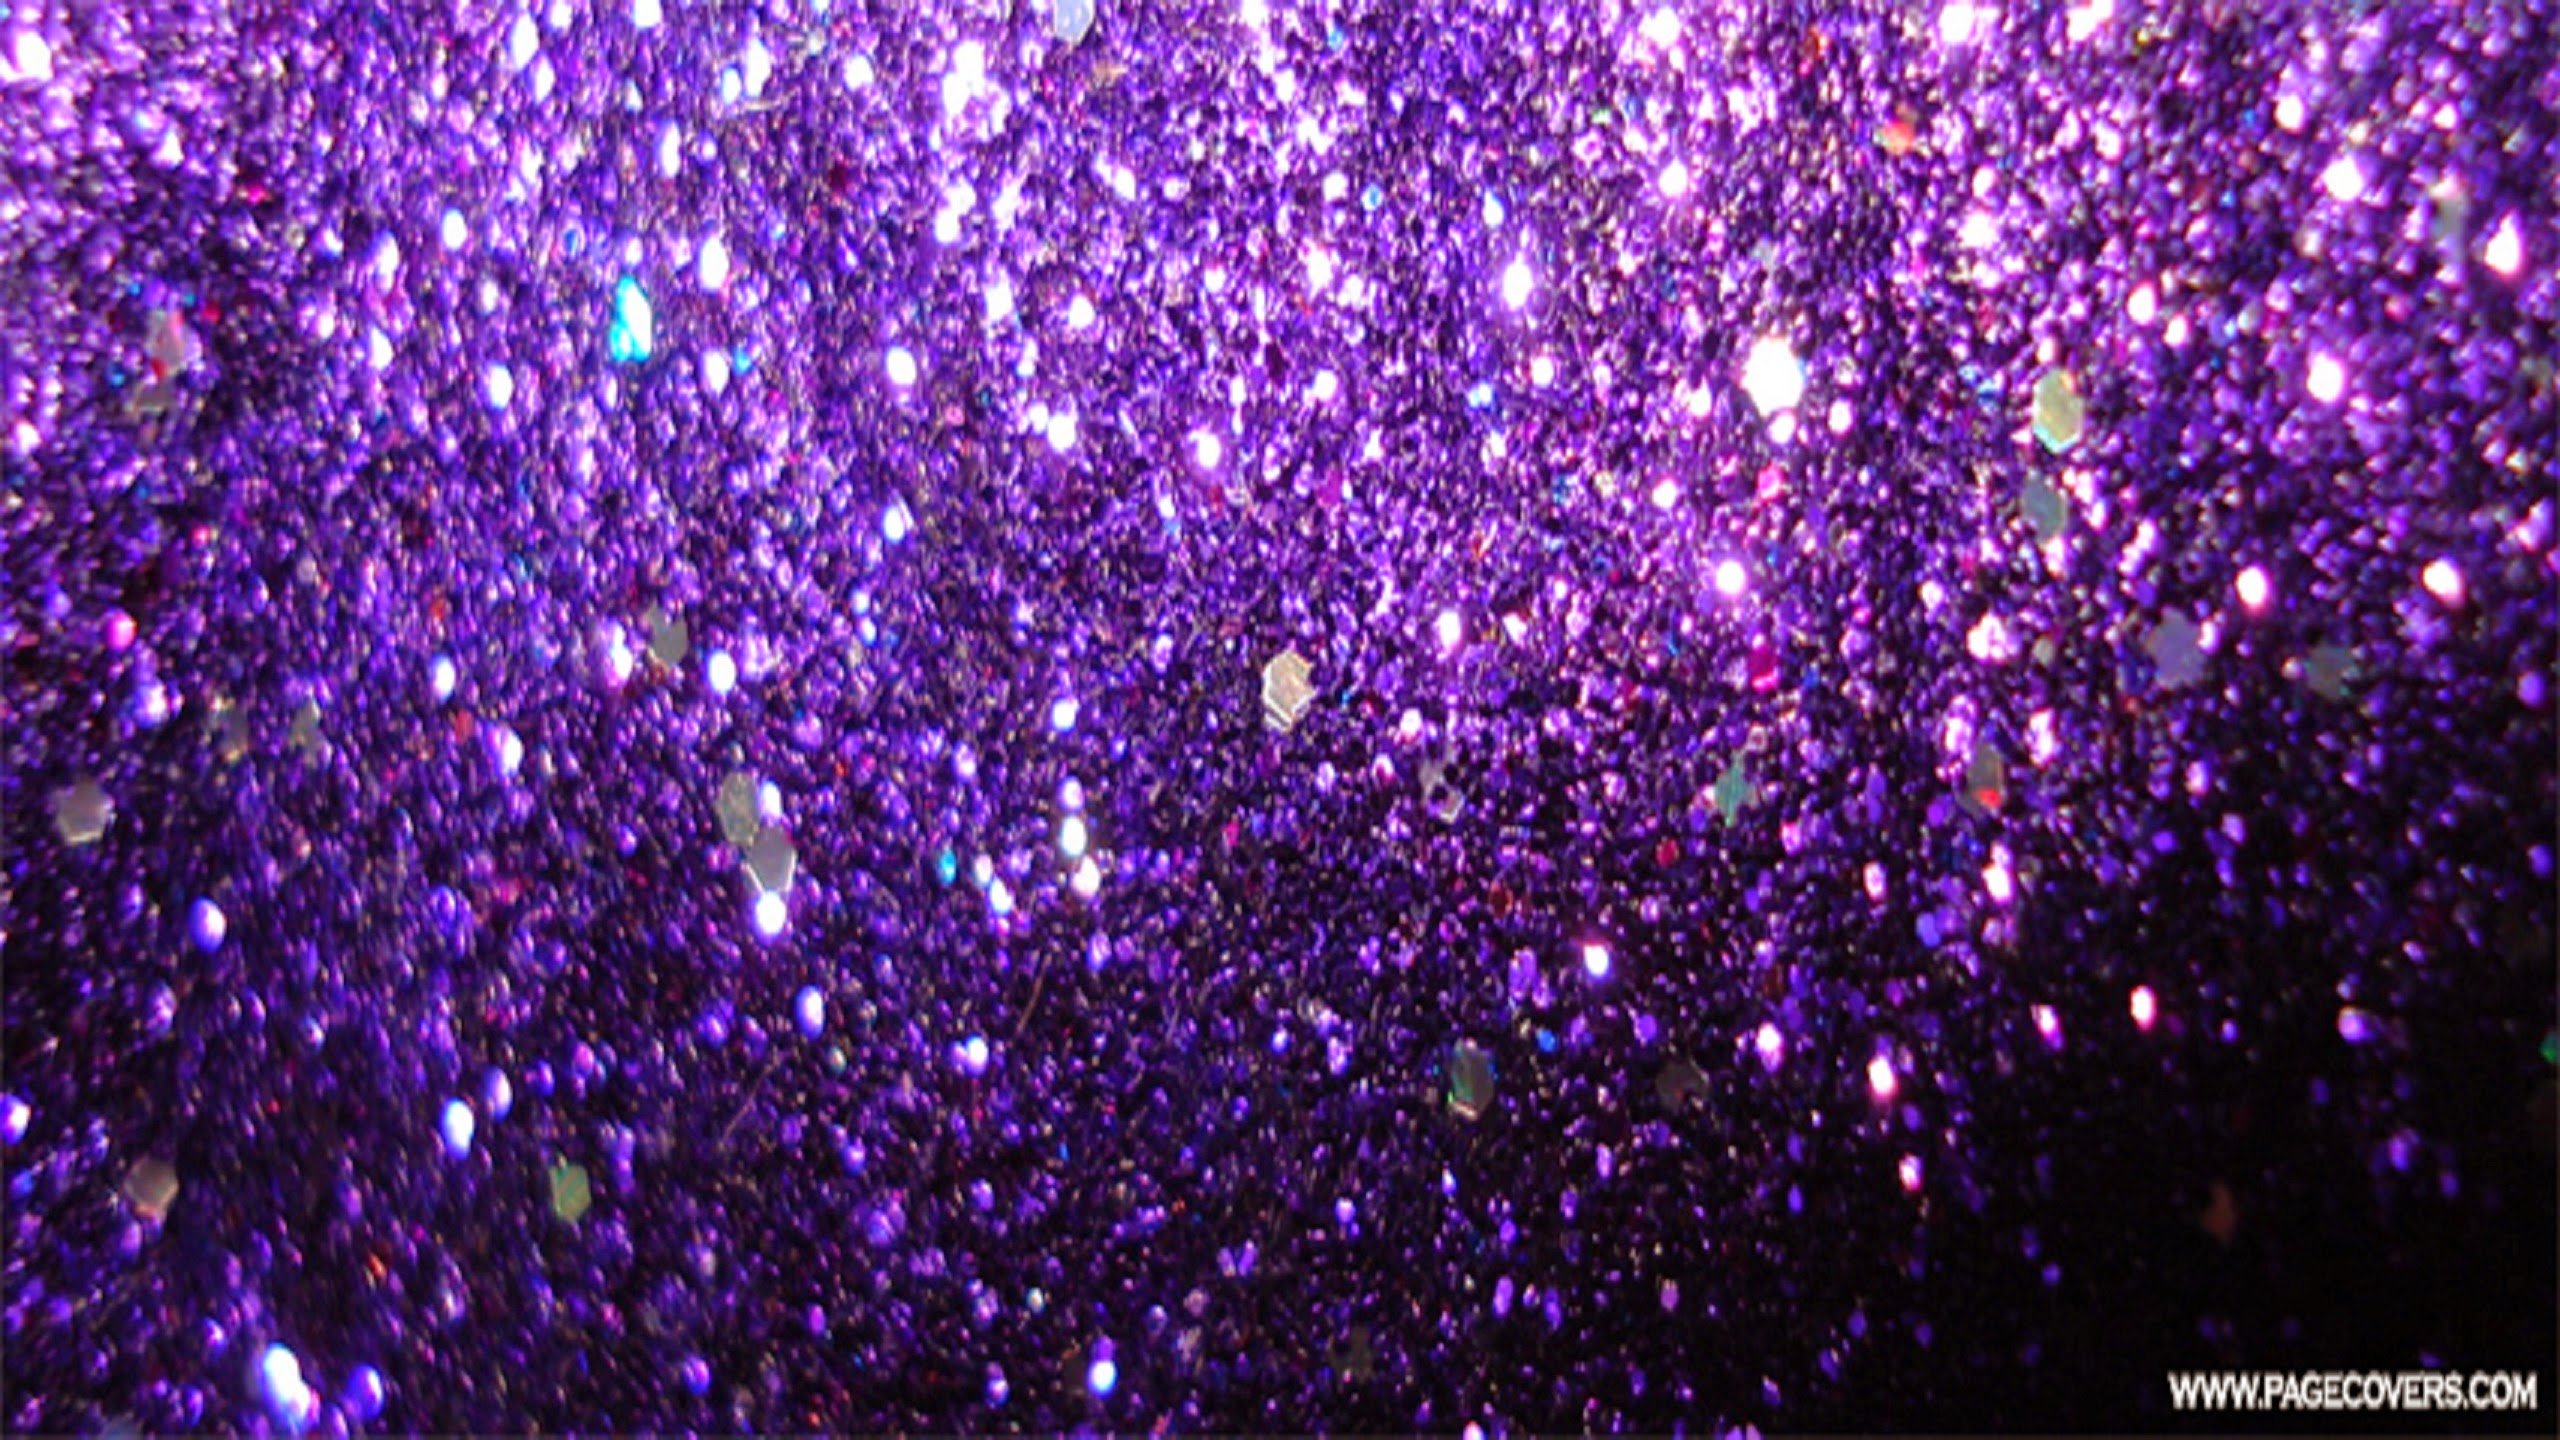 Purple Sparkles Wallpaper Anna poellet 14817 views